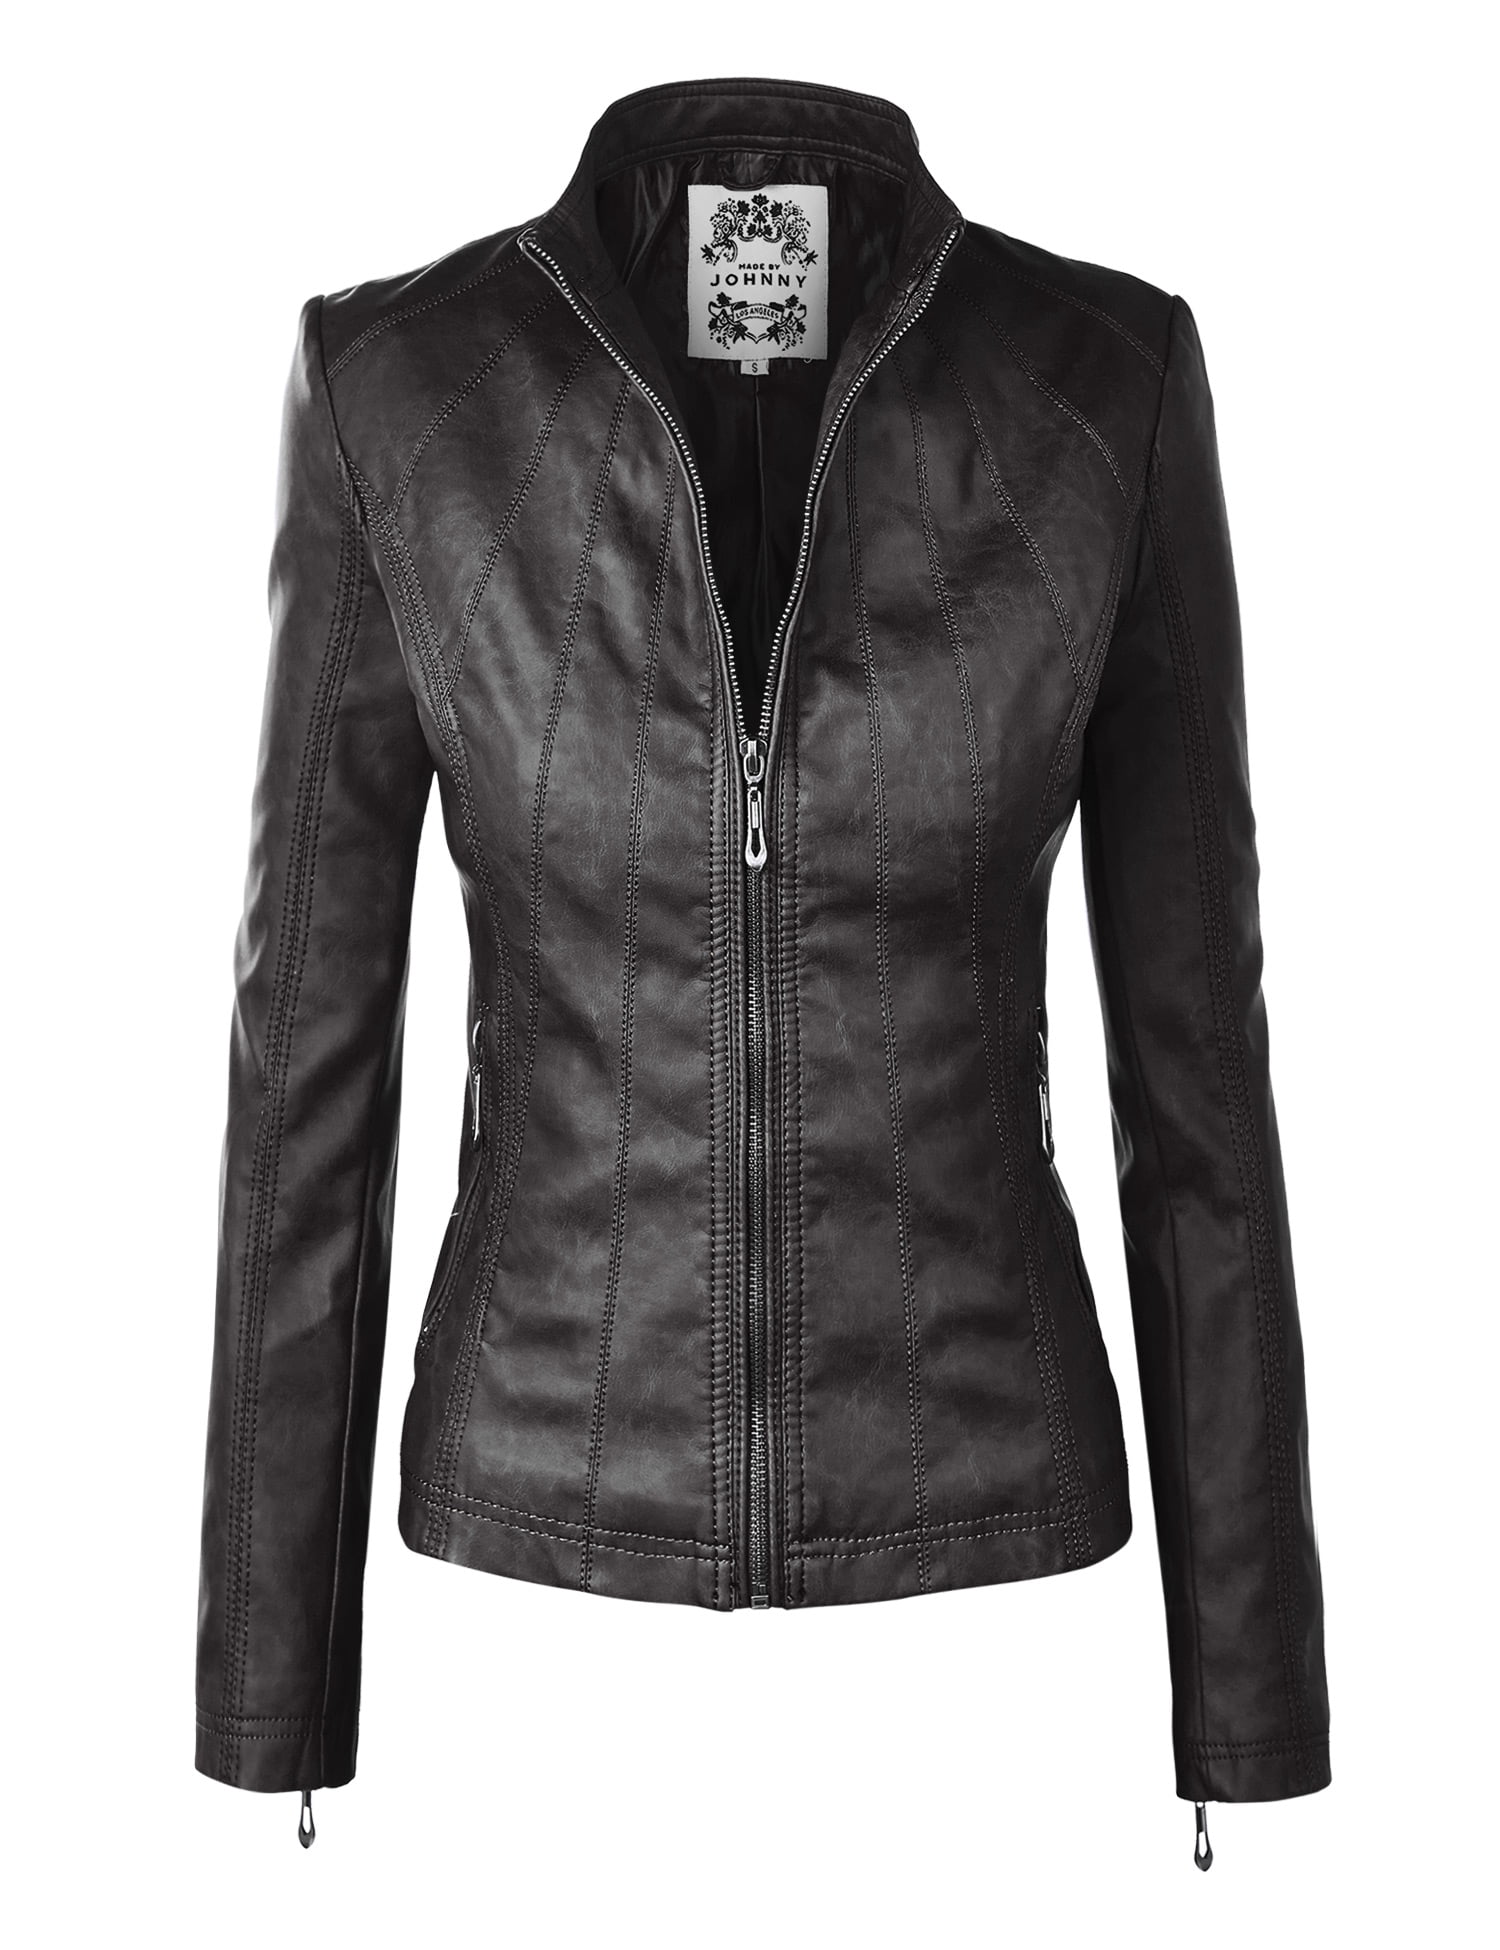 The Drop Women's Heather Faux Leather Moto Jacket